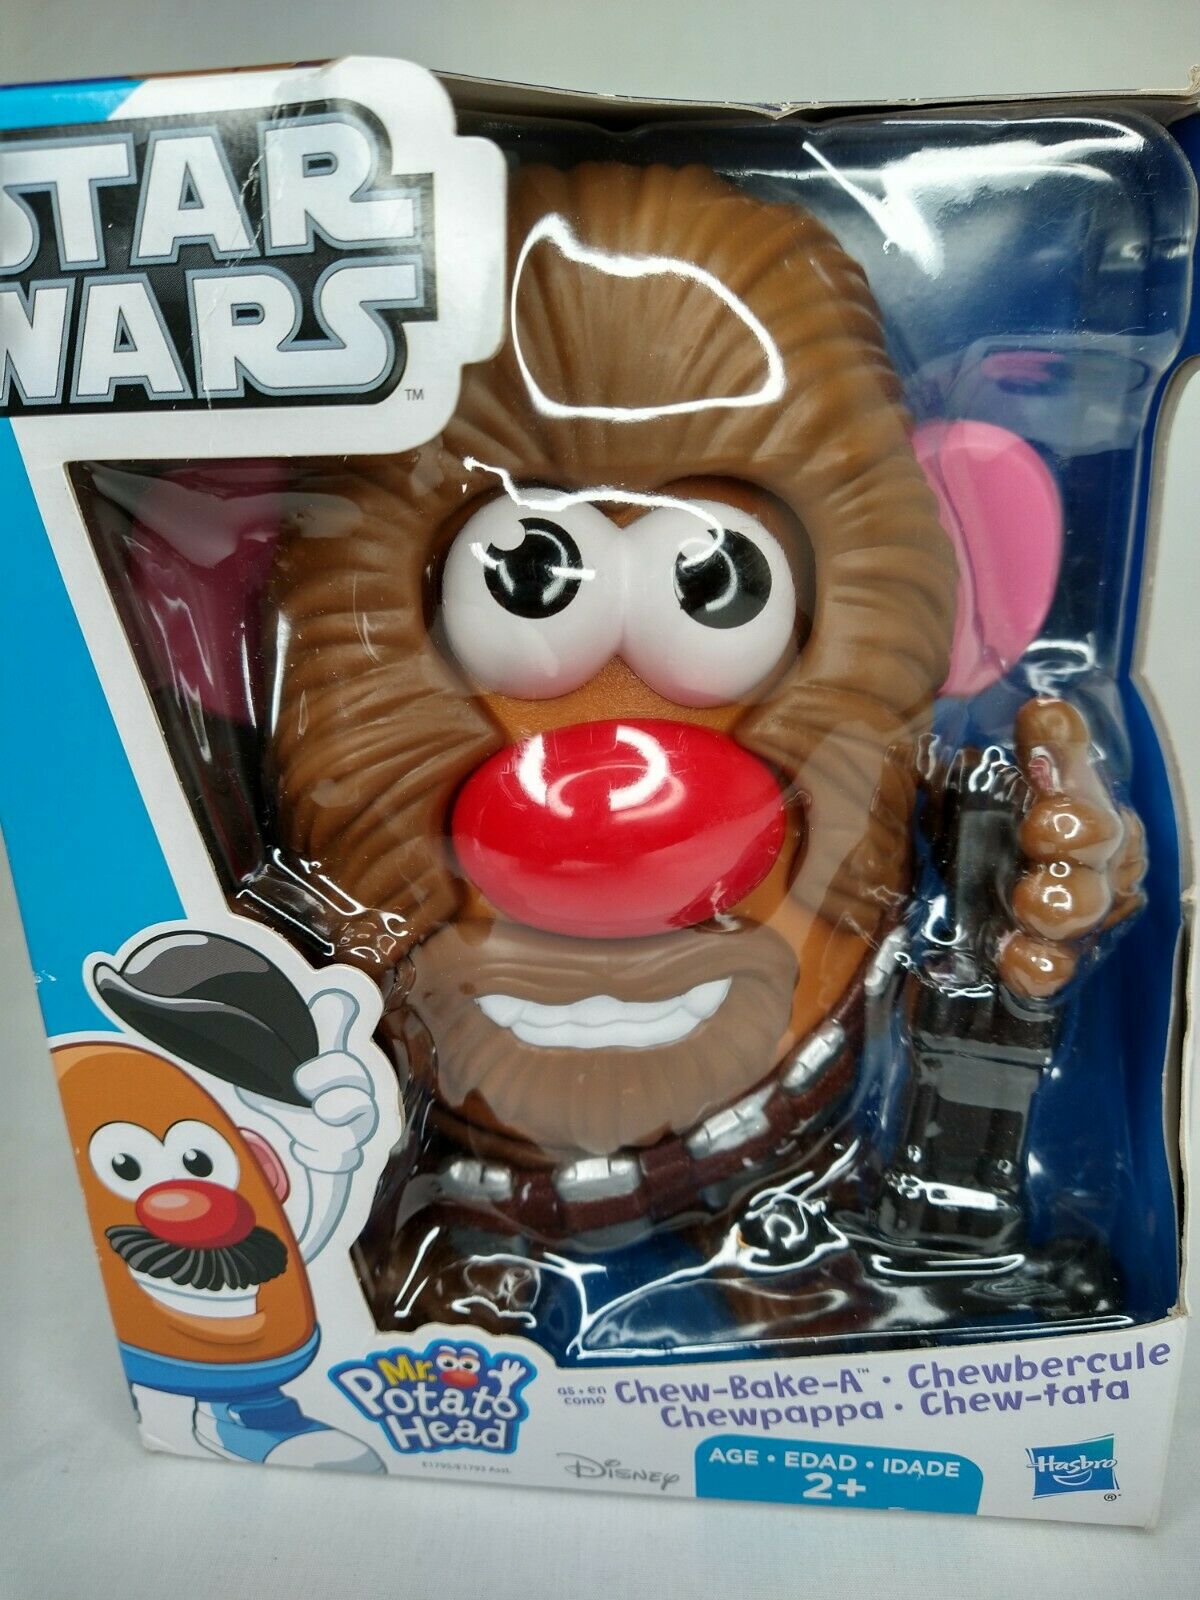 Mr. Potato Head Star Wars Chew-bake-a Chewbacca Disney Chewpappa NEW Chewbercule